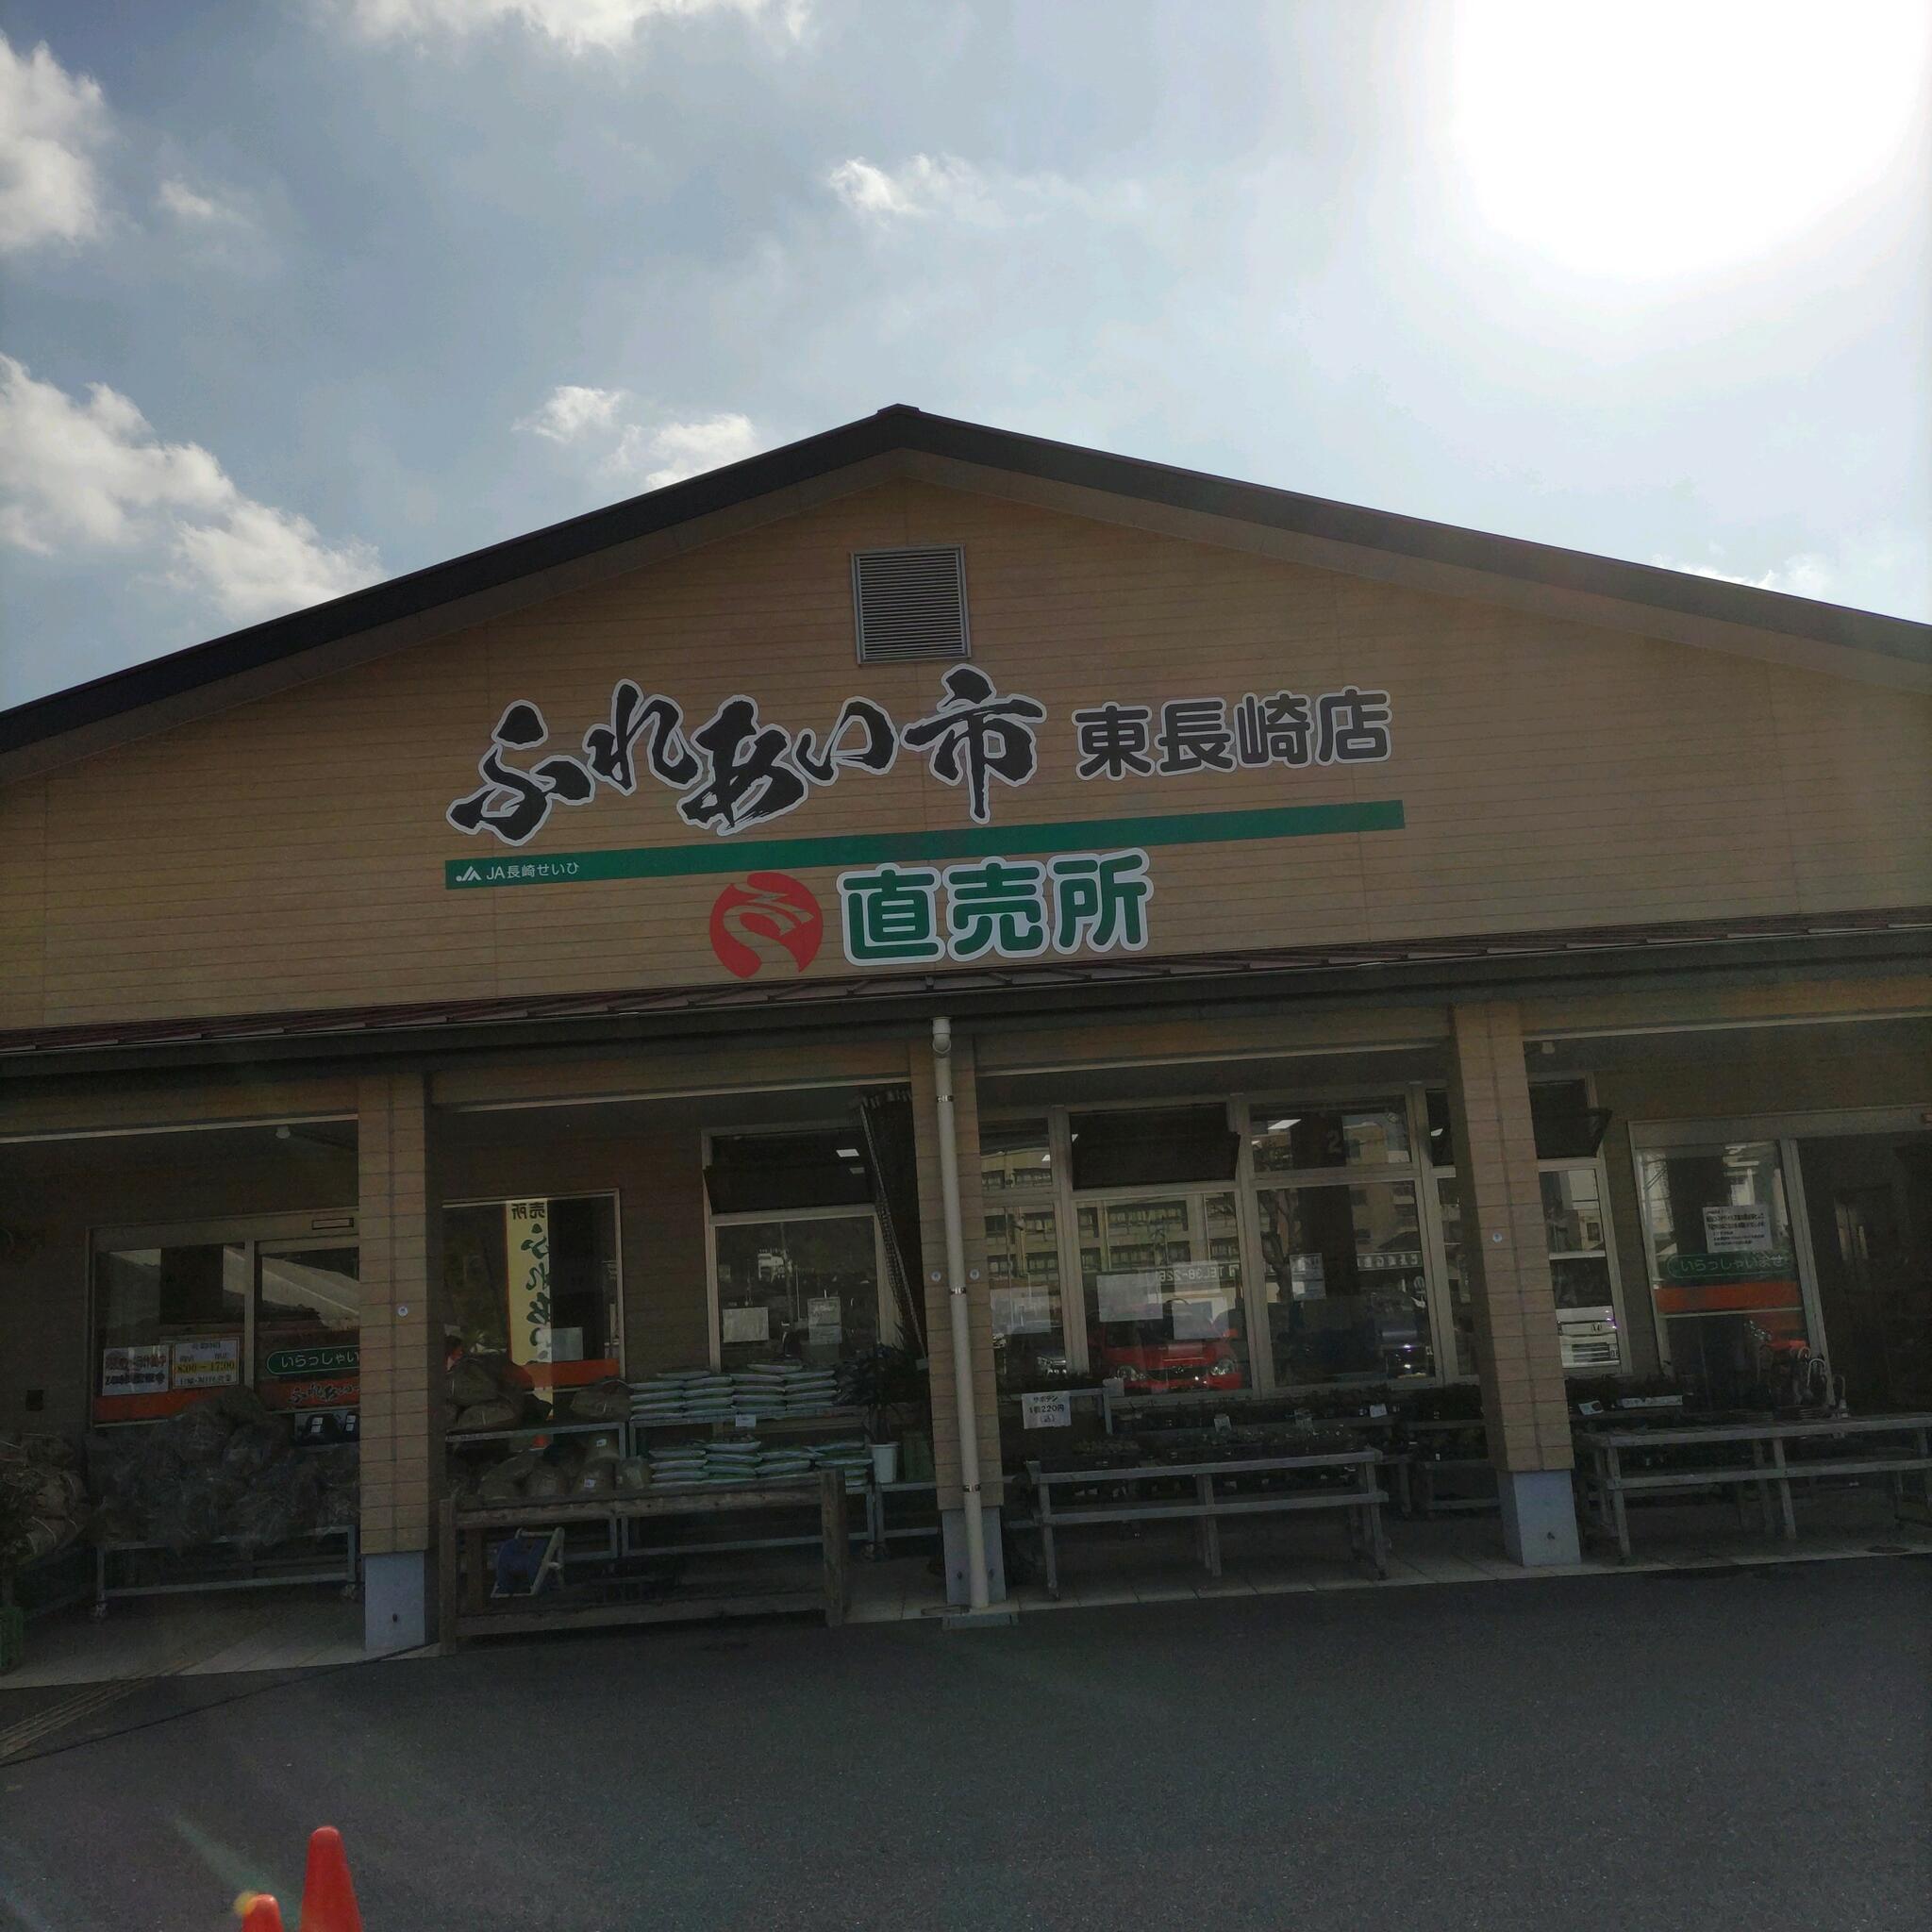 JA直売所 ふれあい市東長崎店の代表写真1